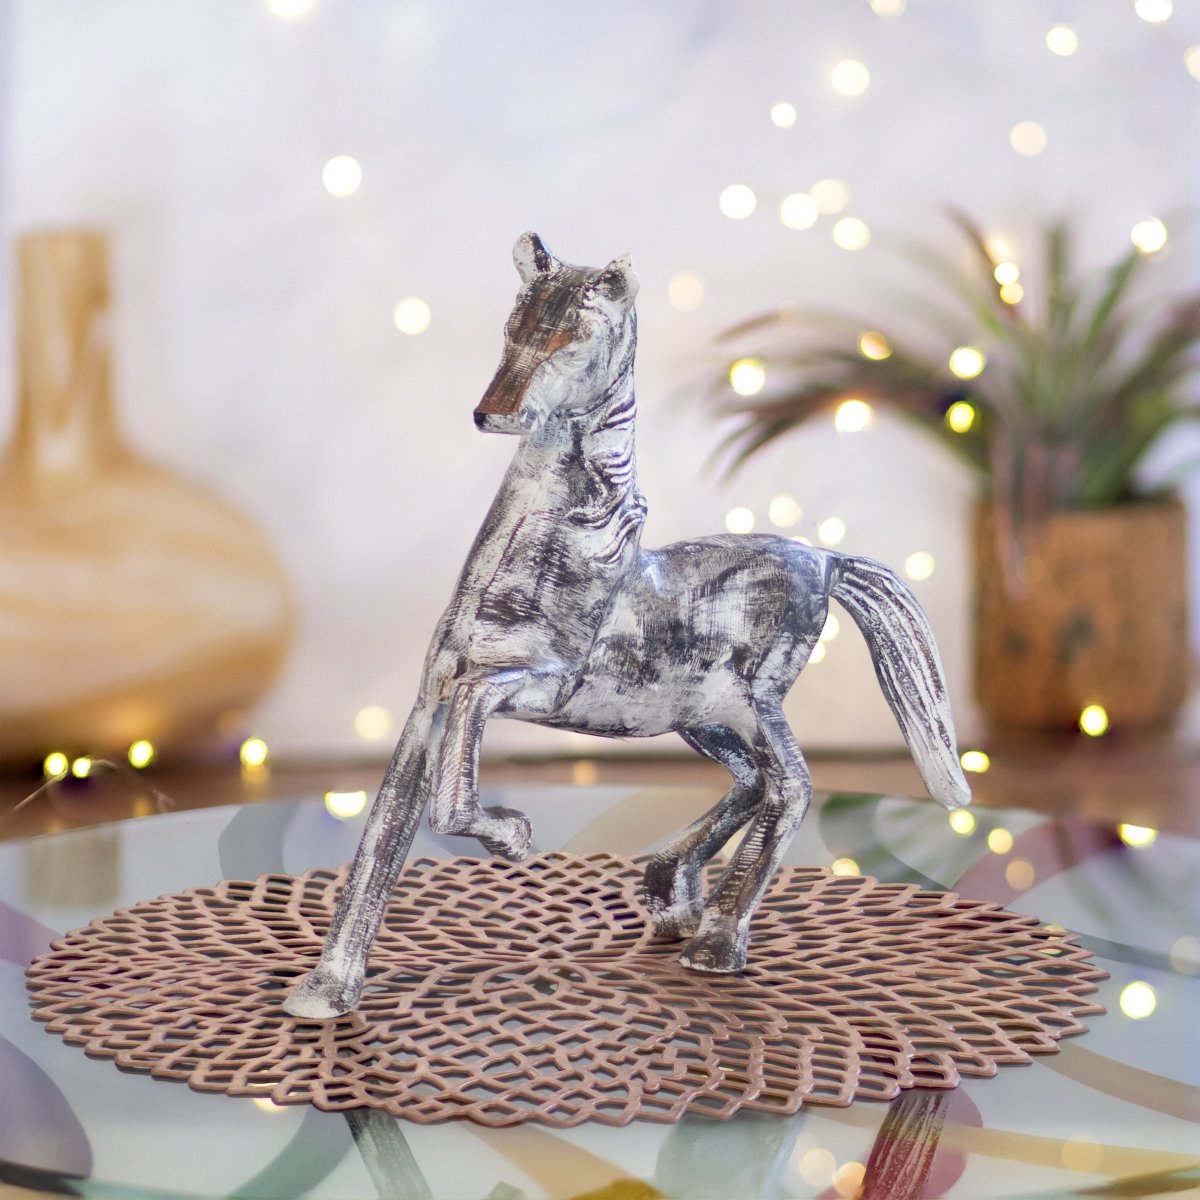 Kezevel Metal Horse Statue - Antique White Black Copper Handcrafted Horse Showpieces Home Decor, Animal Figurine, Table Decor